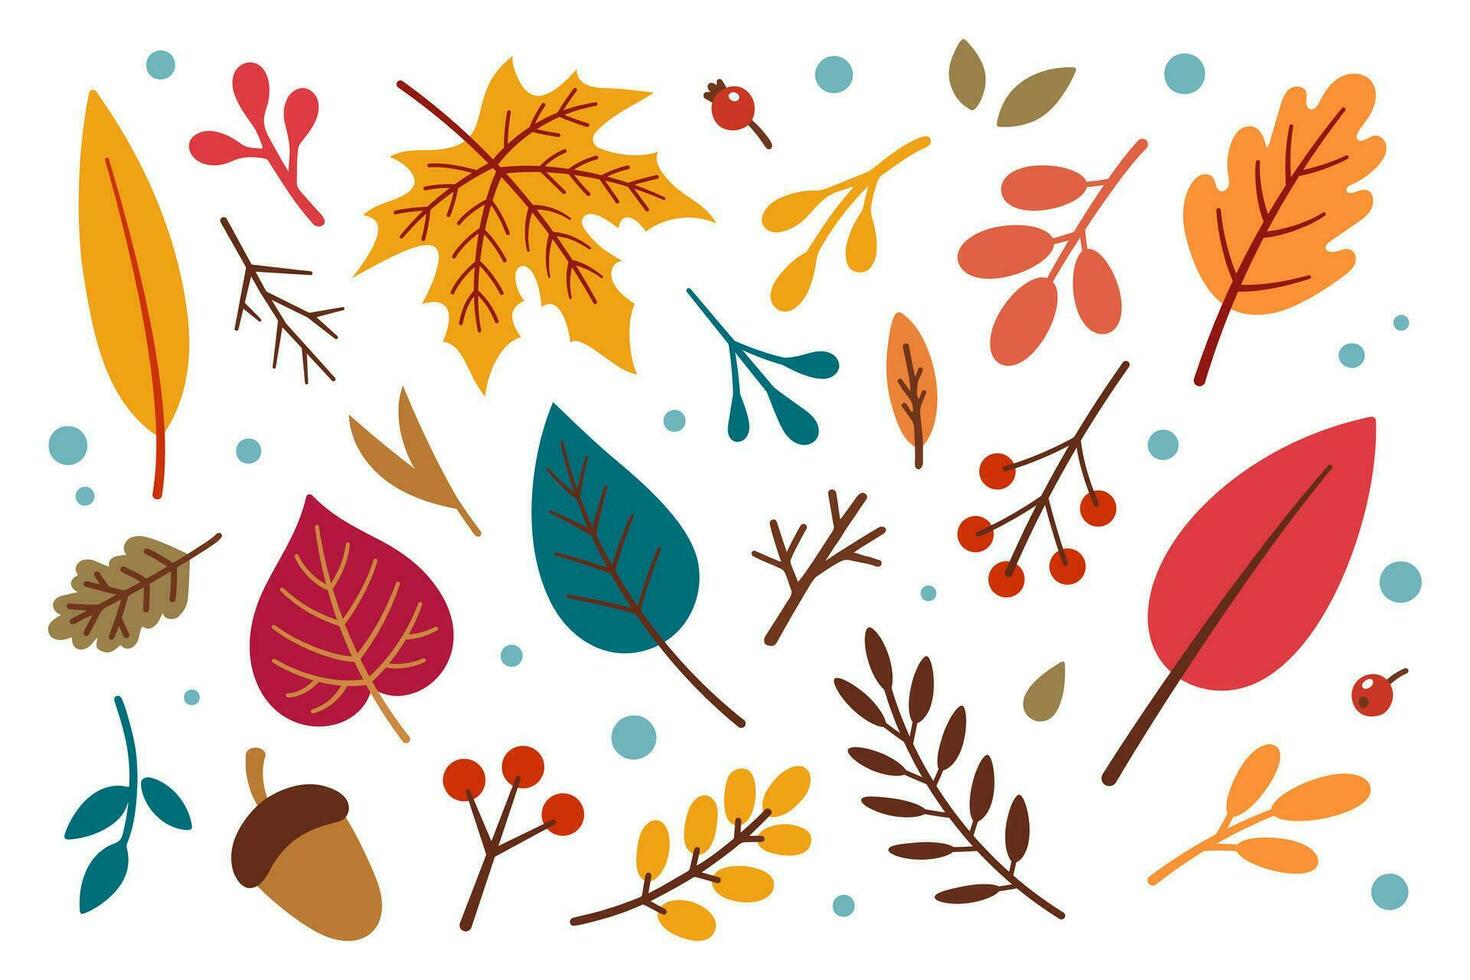 Autumn design elements set. Autumn design elements set. Vector floral illustration. Fall leaves collection. Autumn elements - acorn, apple, leaves, berries. Flat design, doodle style.